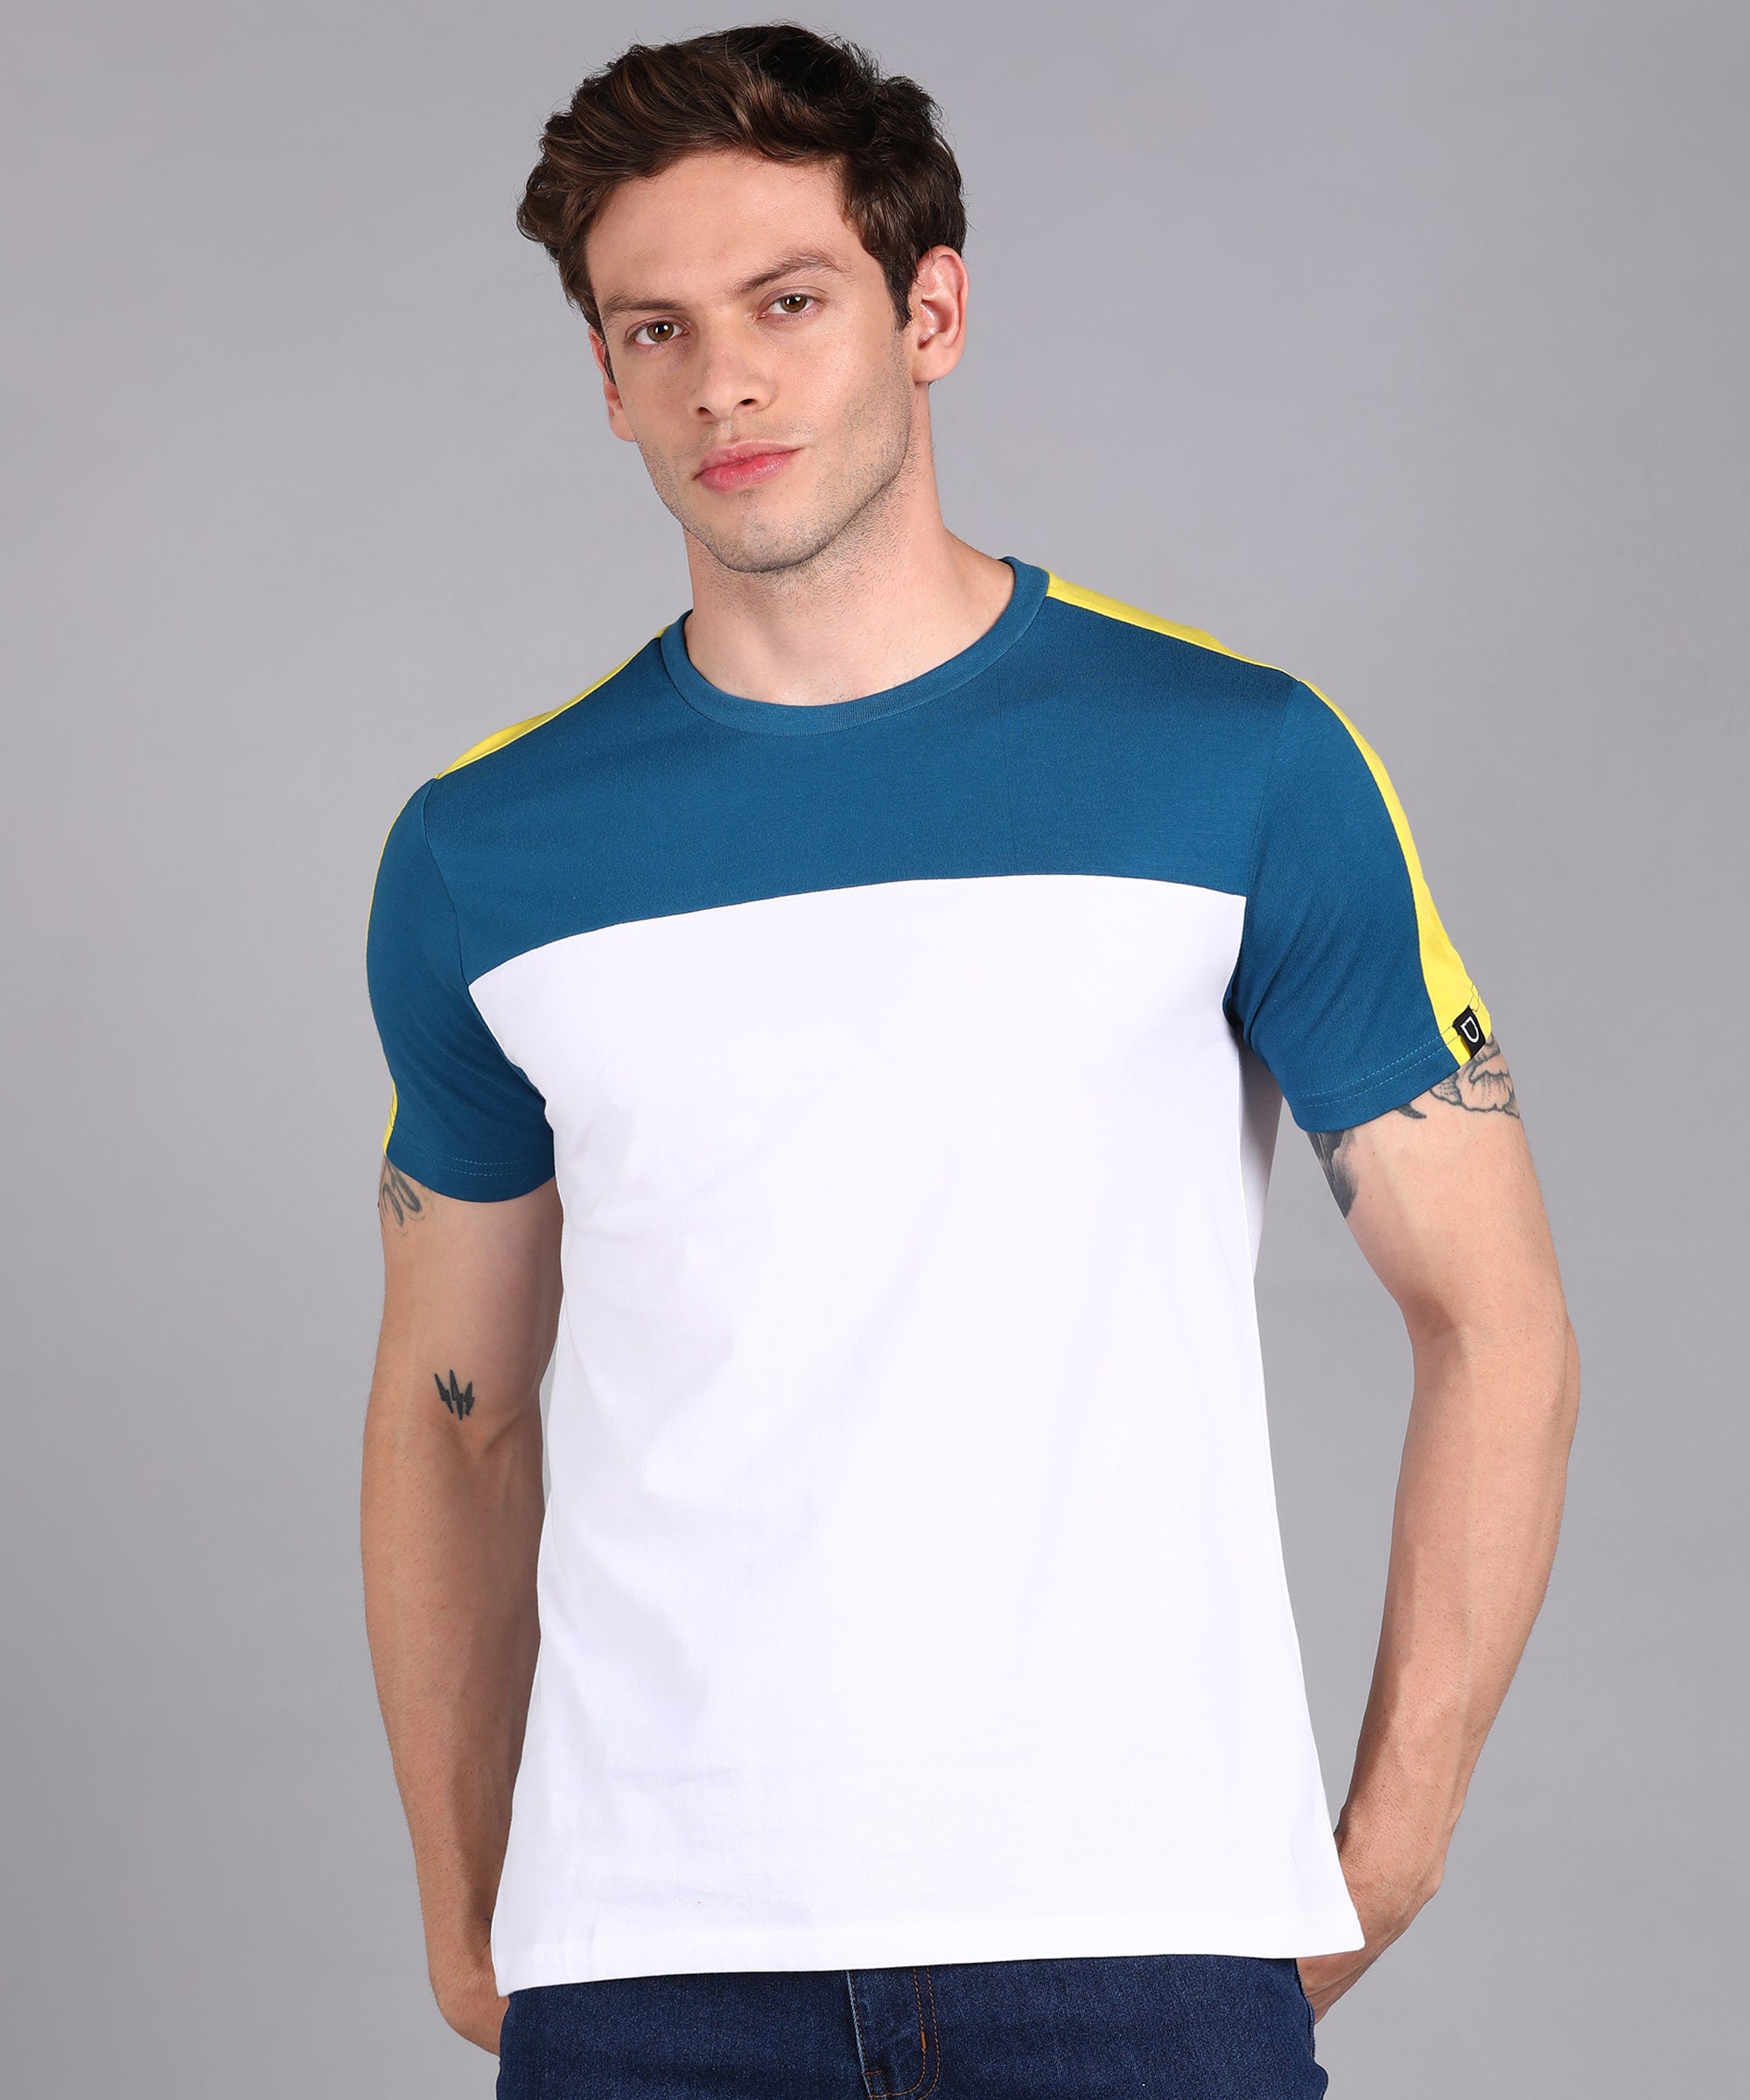 Men's Blue, White, Yellow Cotton Color-Block Slim Fit Half Sleeve T-Shirt